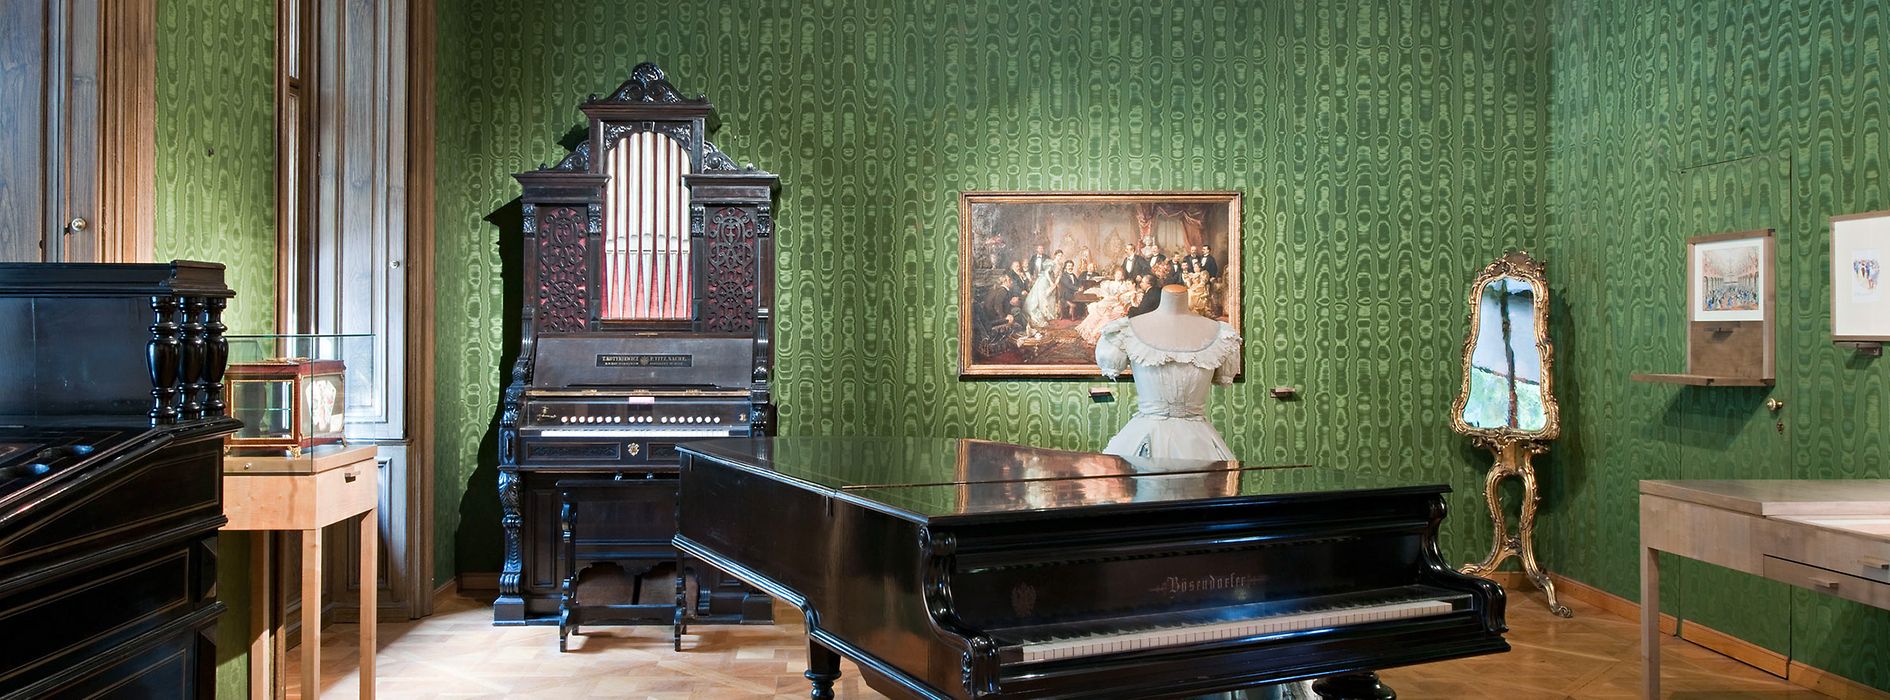 Apartment of Johann Strauss at Praterstrasse, green room